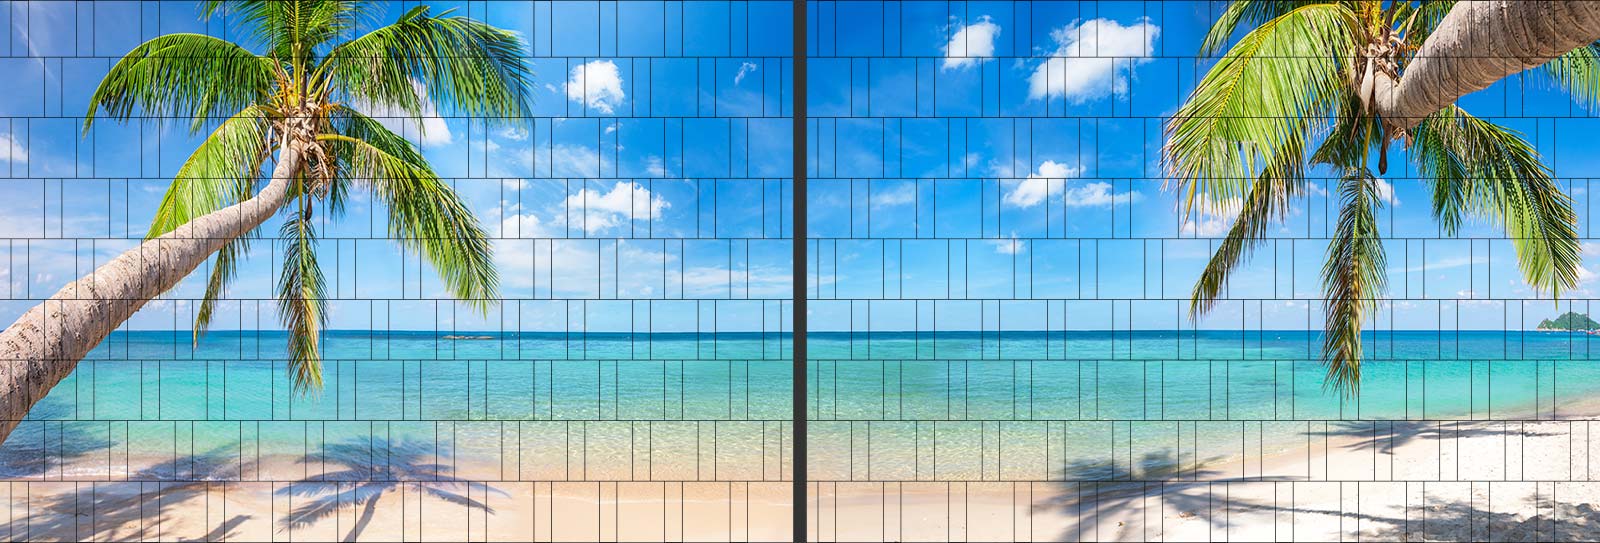 Tropischer Strand - XL Panorama Zaundruck Poster